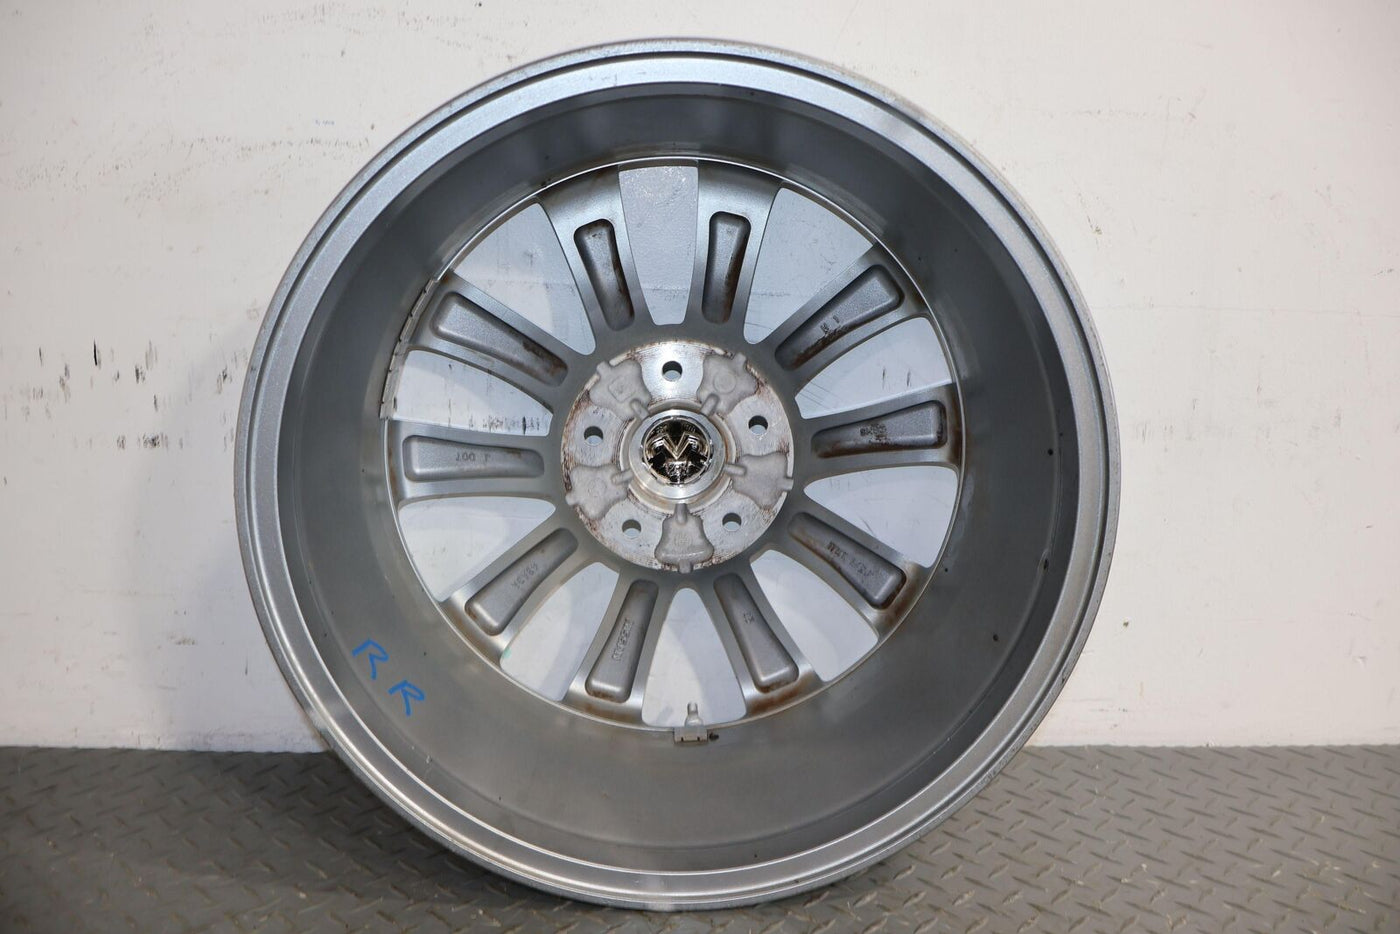 14-17 Infiniti Q50 17X7.5 OEM 5 V Spoke Wheels Set of 4 (Painted Silver)